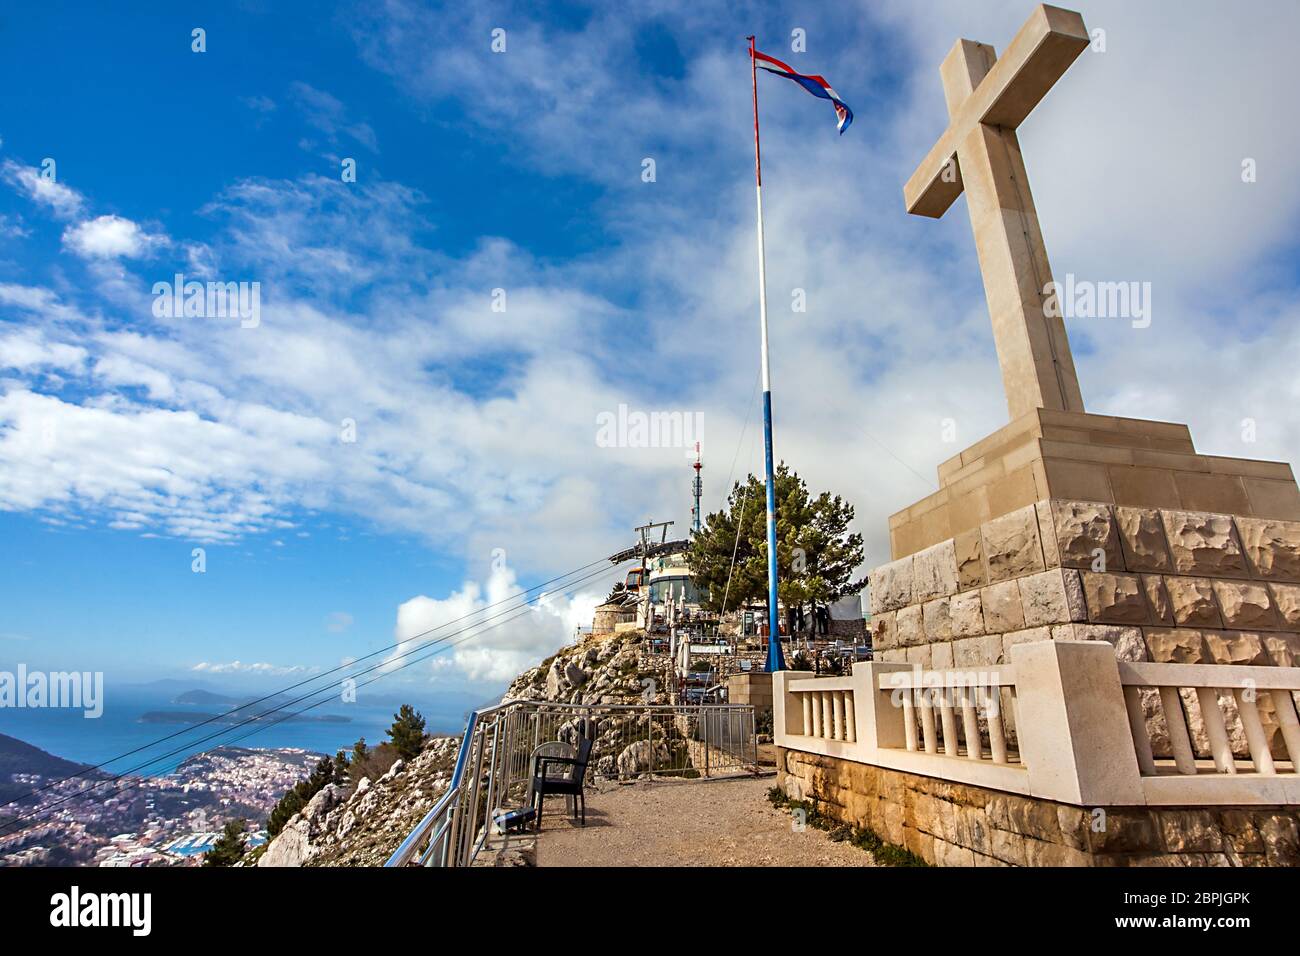 Festung Imperjal auf dem Berg SDR in Dubrovnik Kroatien Stockfoto